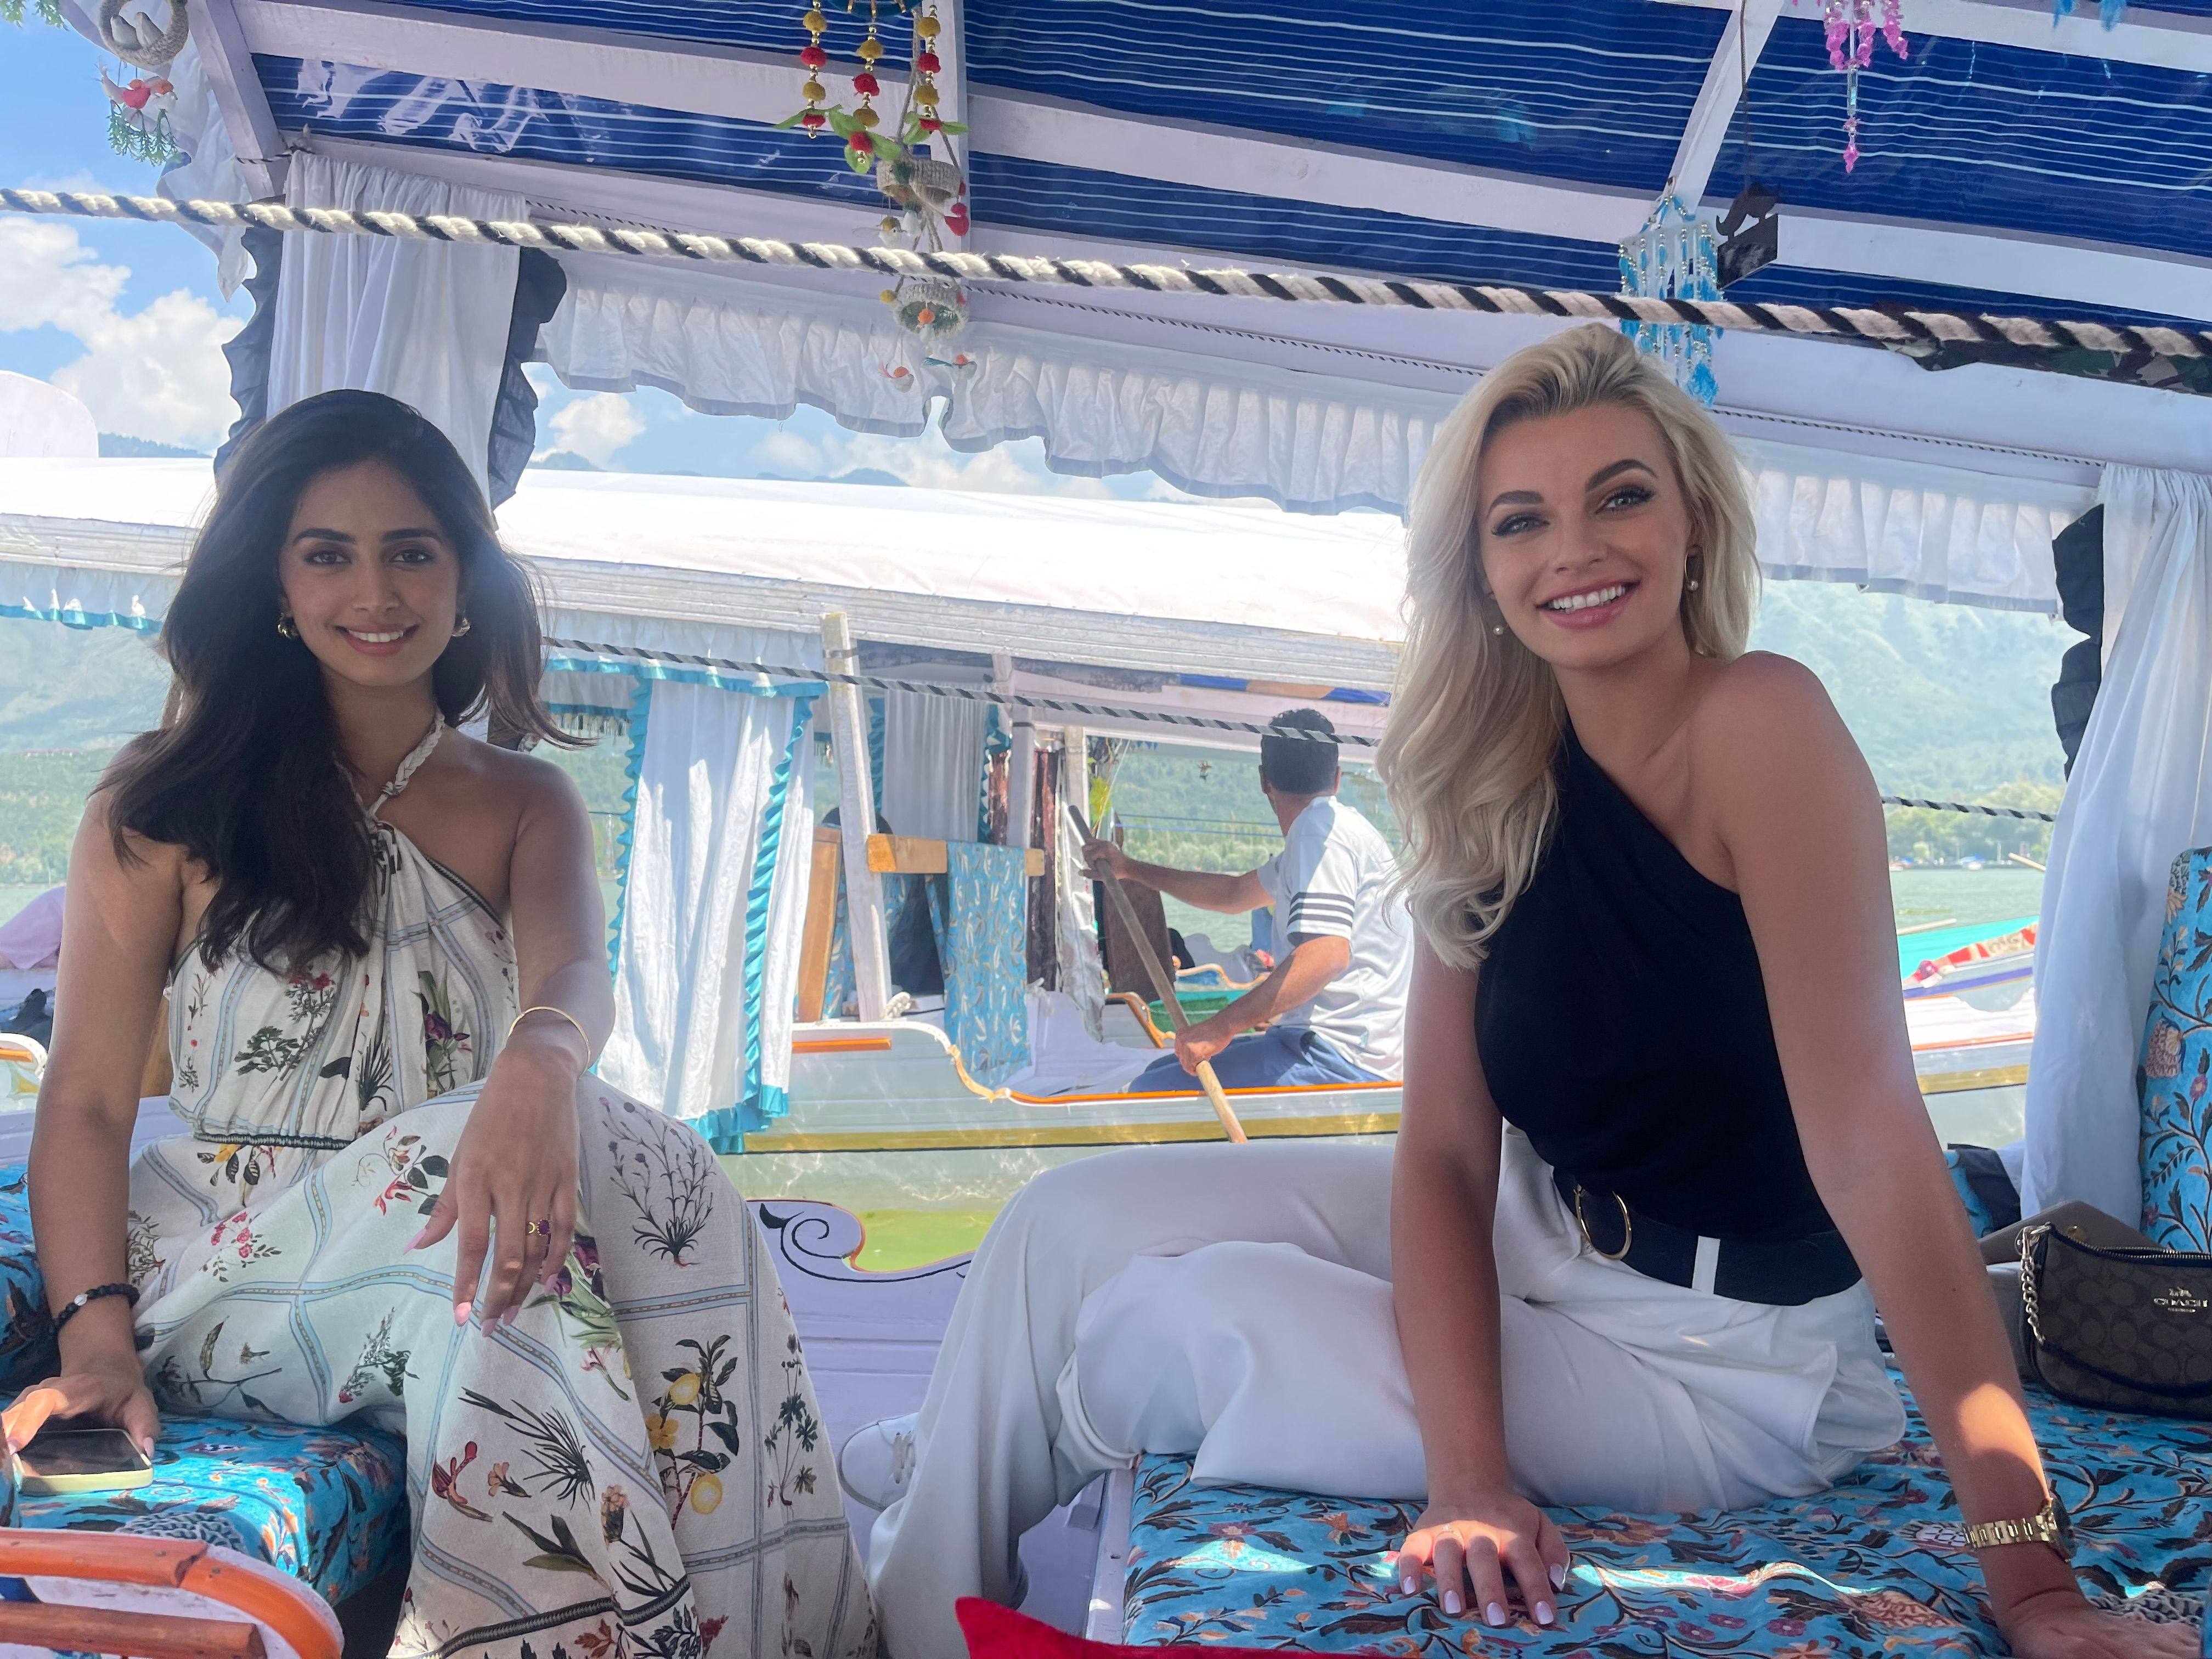 Miss World 2022 Karolina Bielawska (right) and Miss India World 2022 Sini Shetty ride a boat on the Dal lake in Srinagar, summer capital of Jammu and Kashmir, on Tuesday. Photo: Jammu and Kashmir Tourism Department / AFP